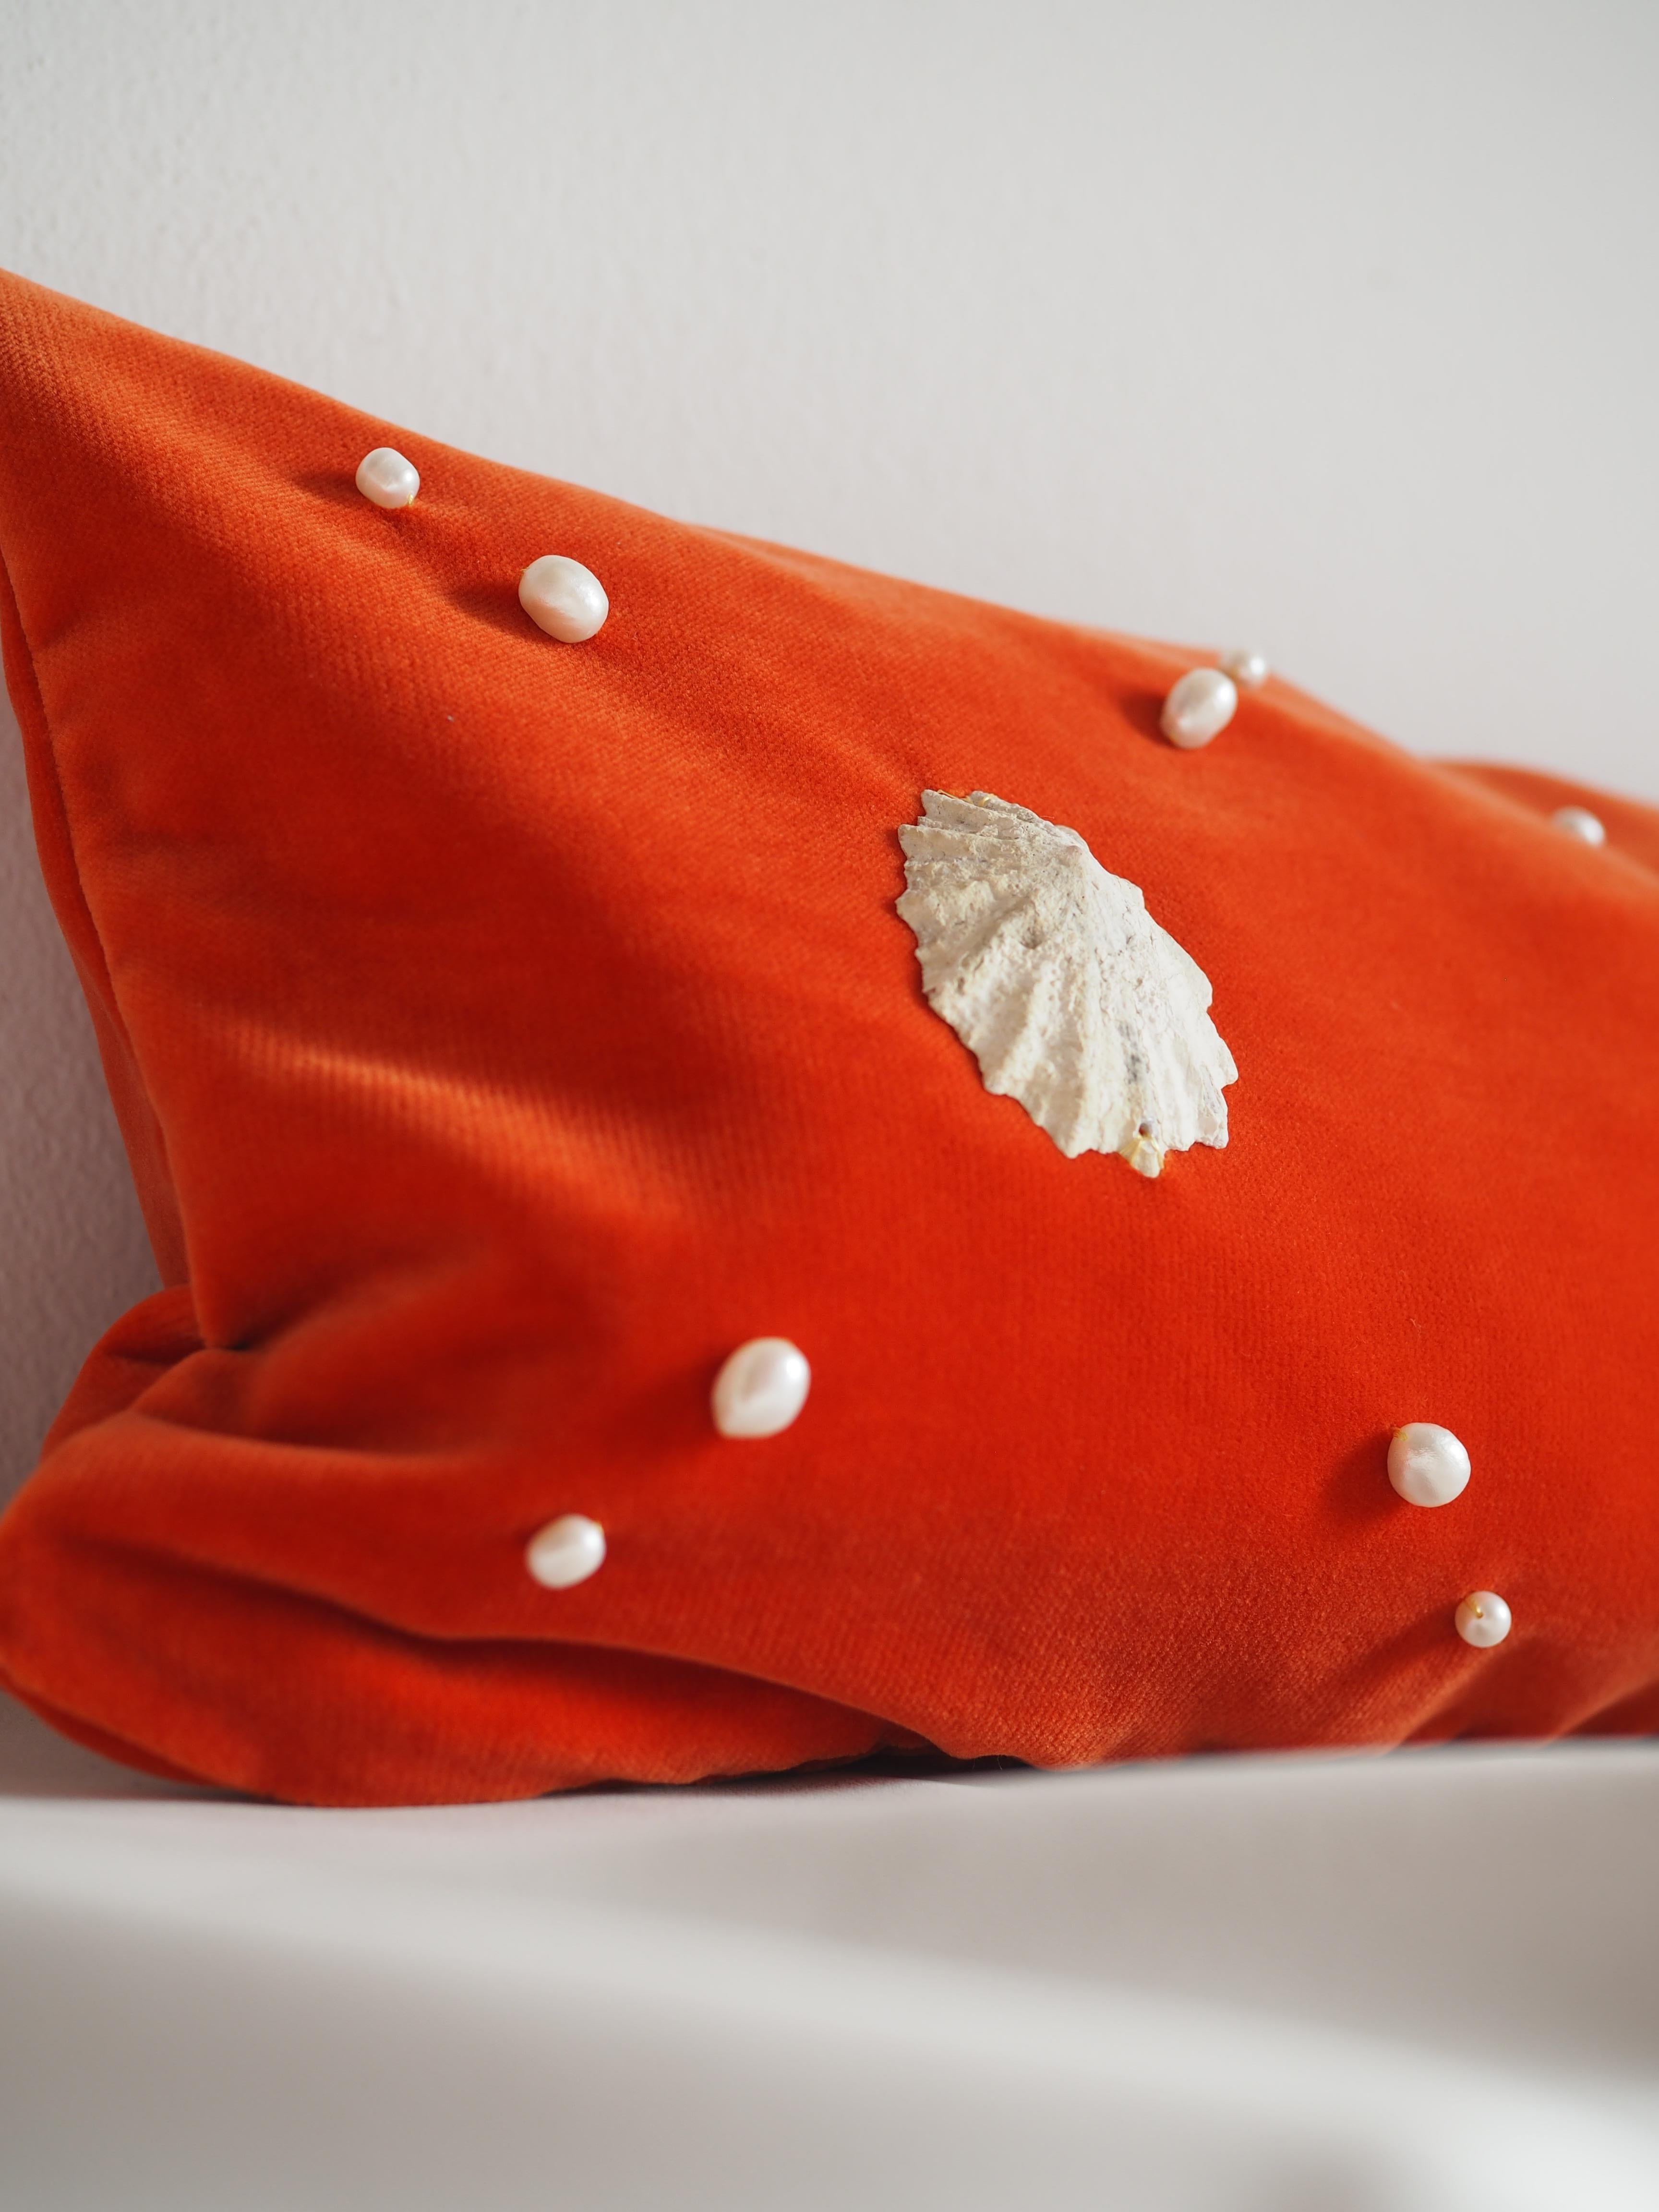 Spanish Bon Appetit 013 Decorative Cushion Culto Ponsoda 21st century desingn For Sale